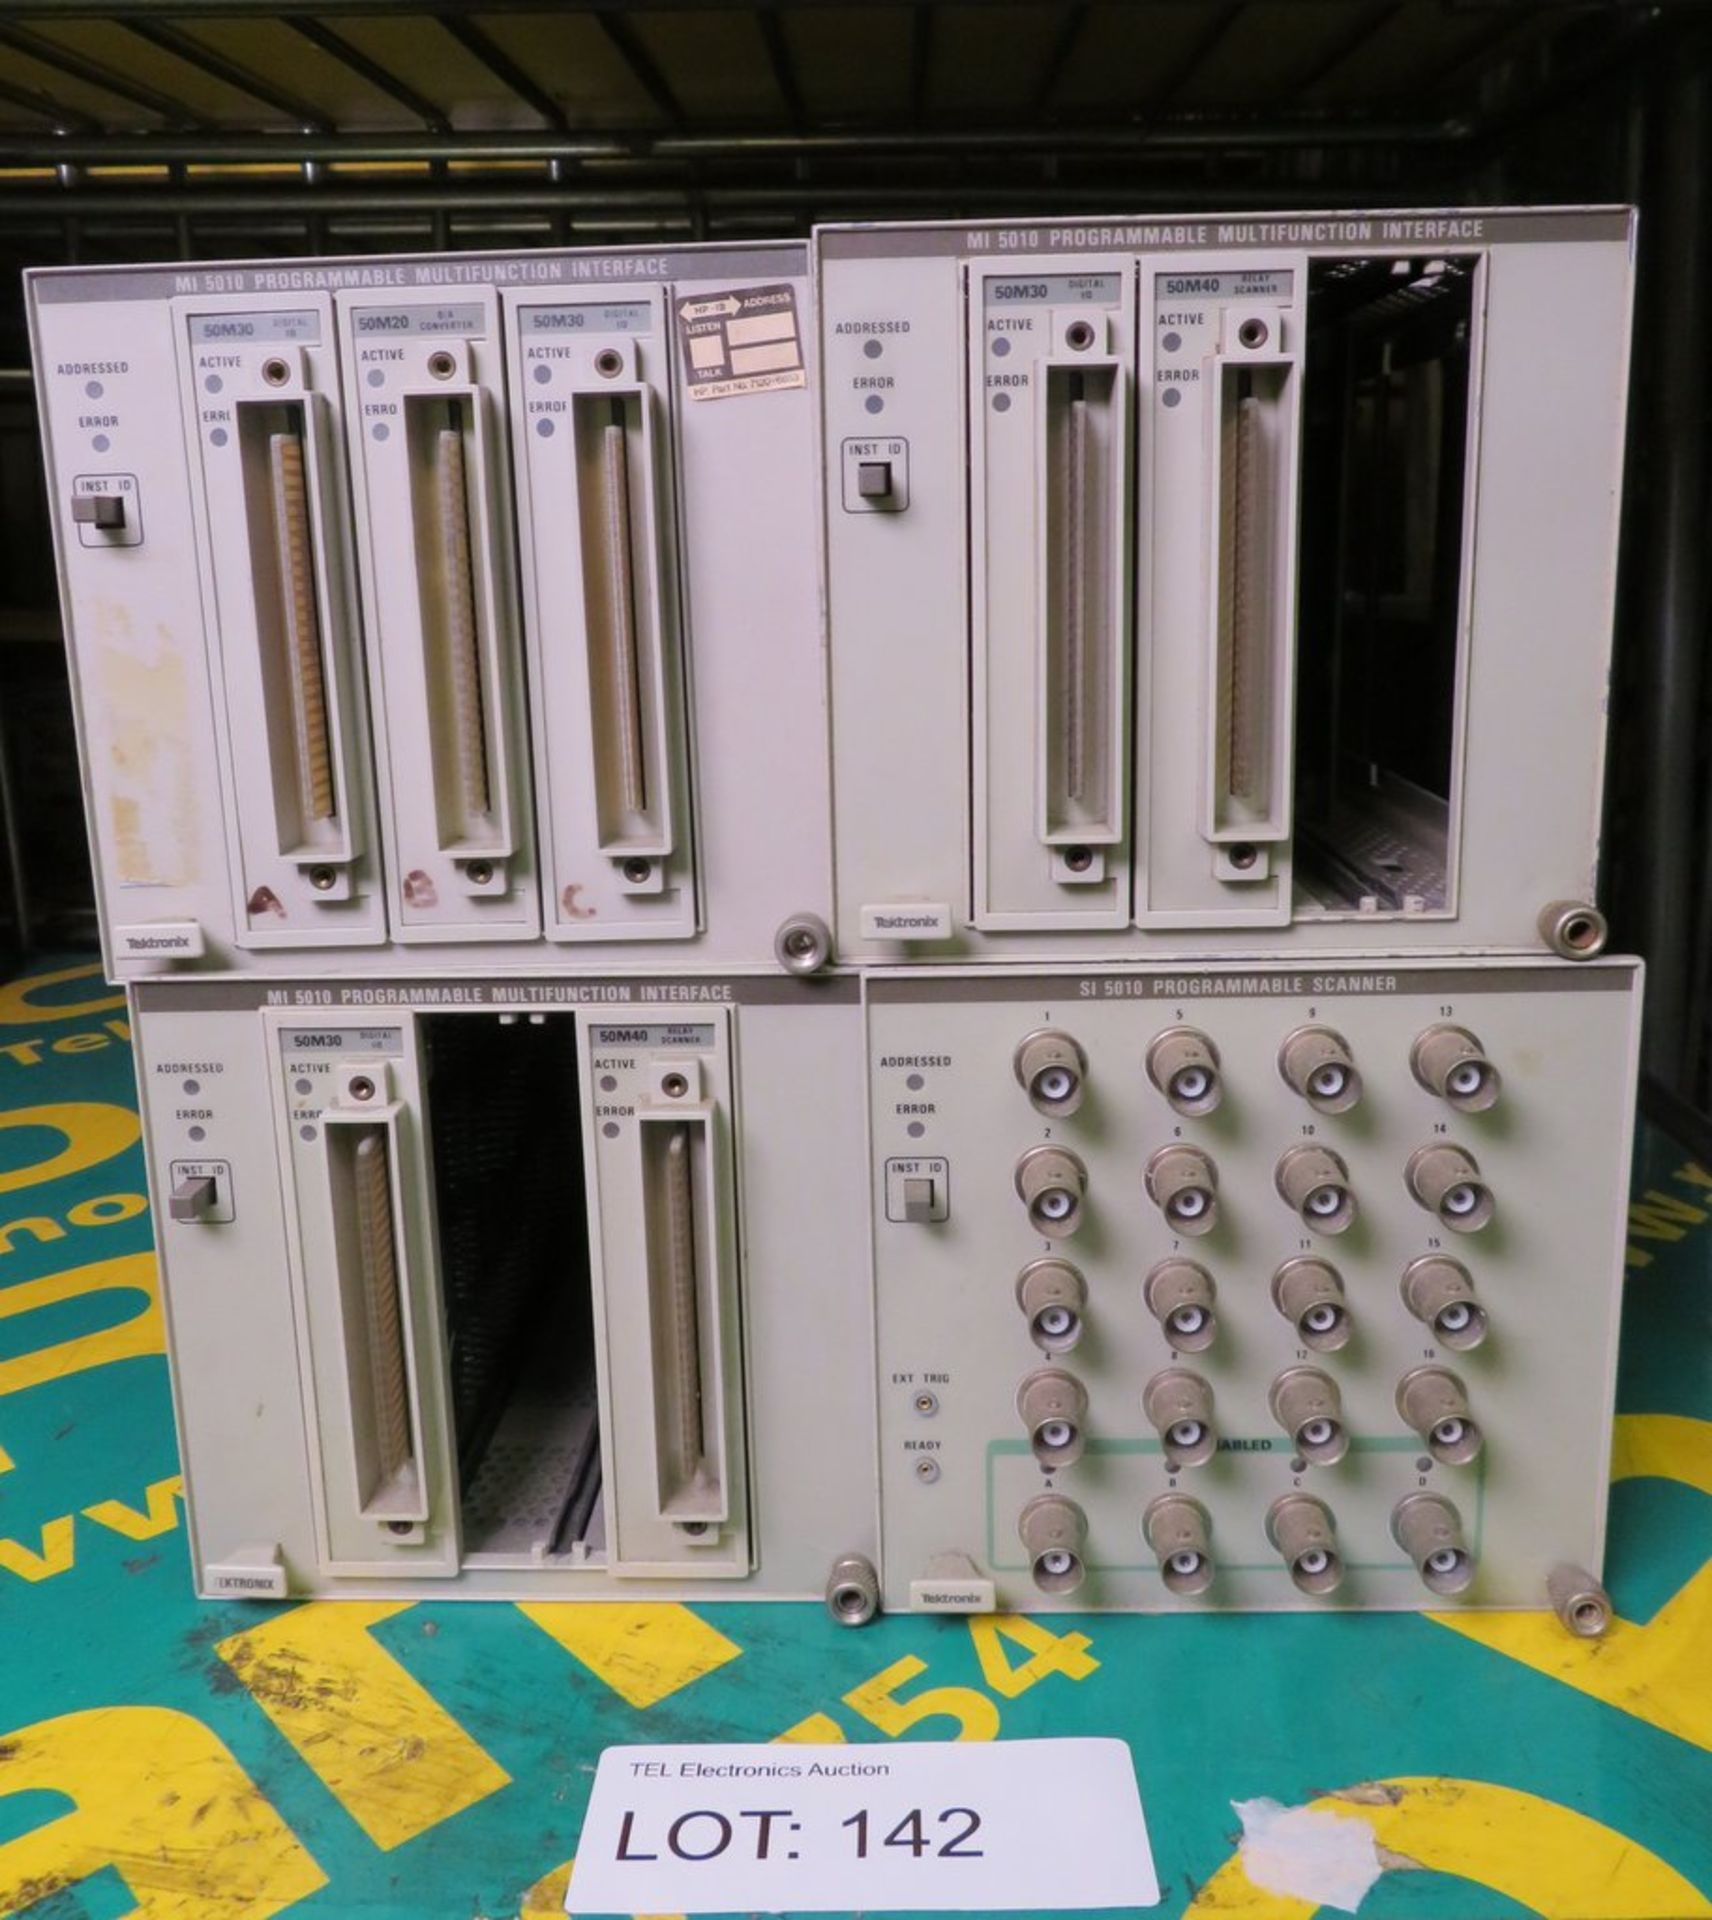 4x Tektronix Plug-ins - 3x MI5010 Programmable Mulitfunction Interface, 1x SI 5010 Program